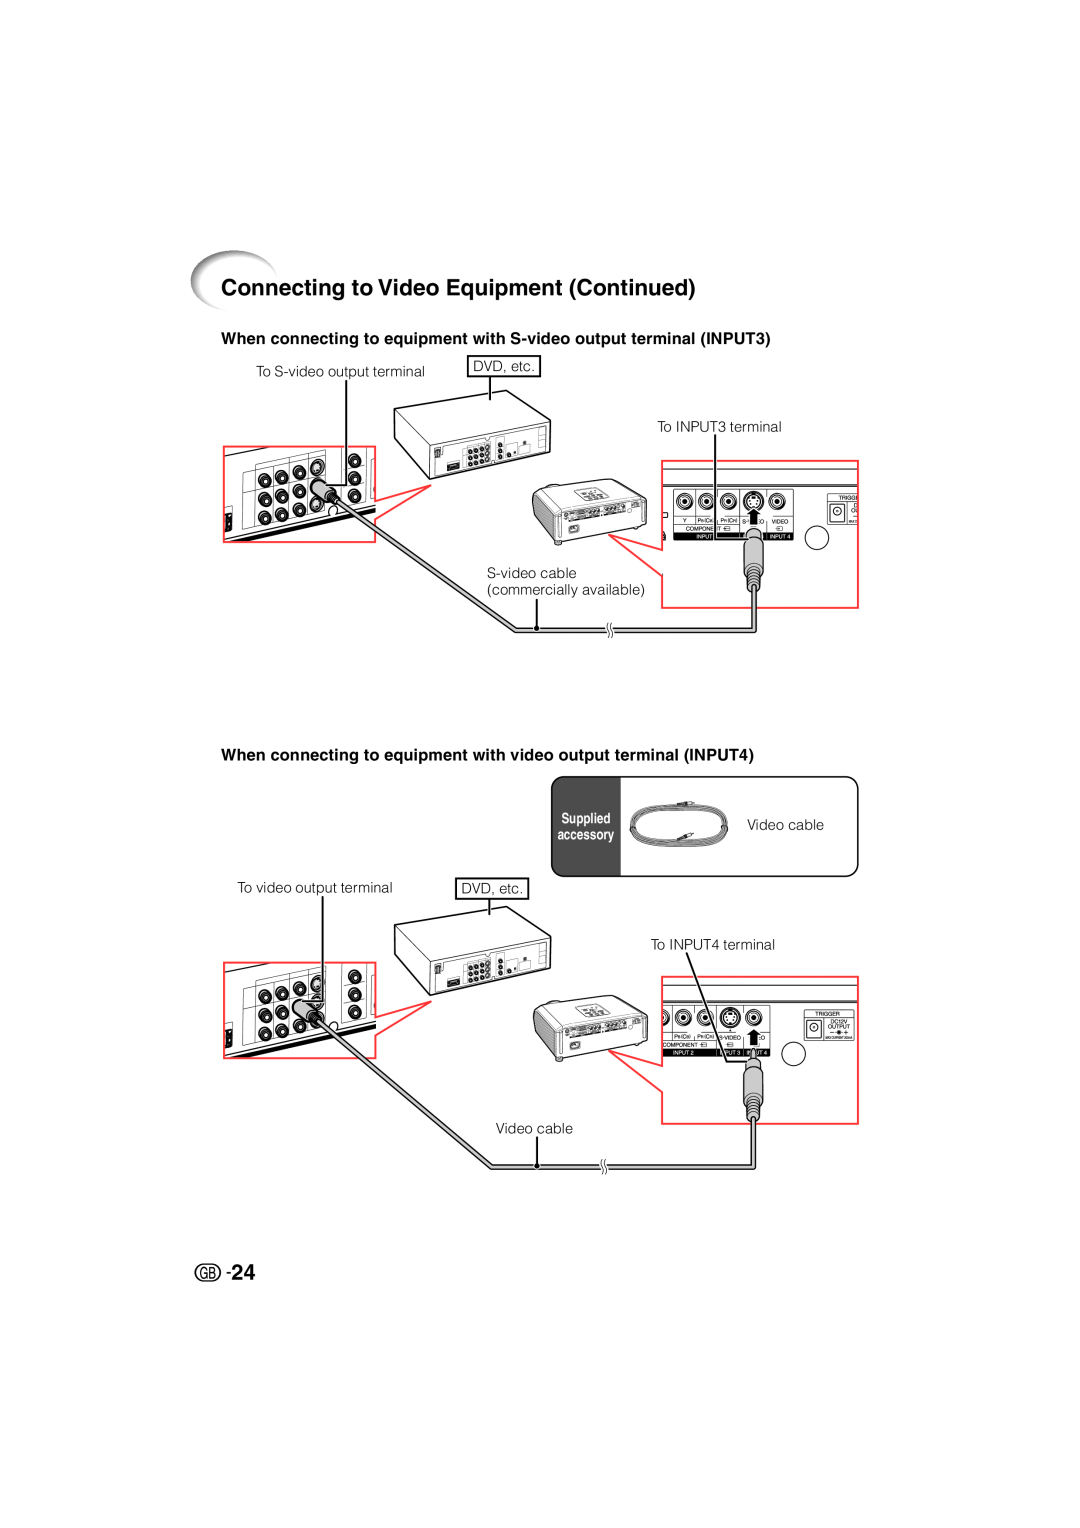 Sharp XV-Z3000 Connecting to Video Equipment Continued, When connecting to equipment with S-video output terminal INPUT3 